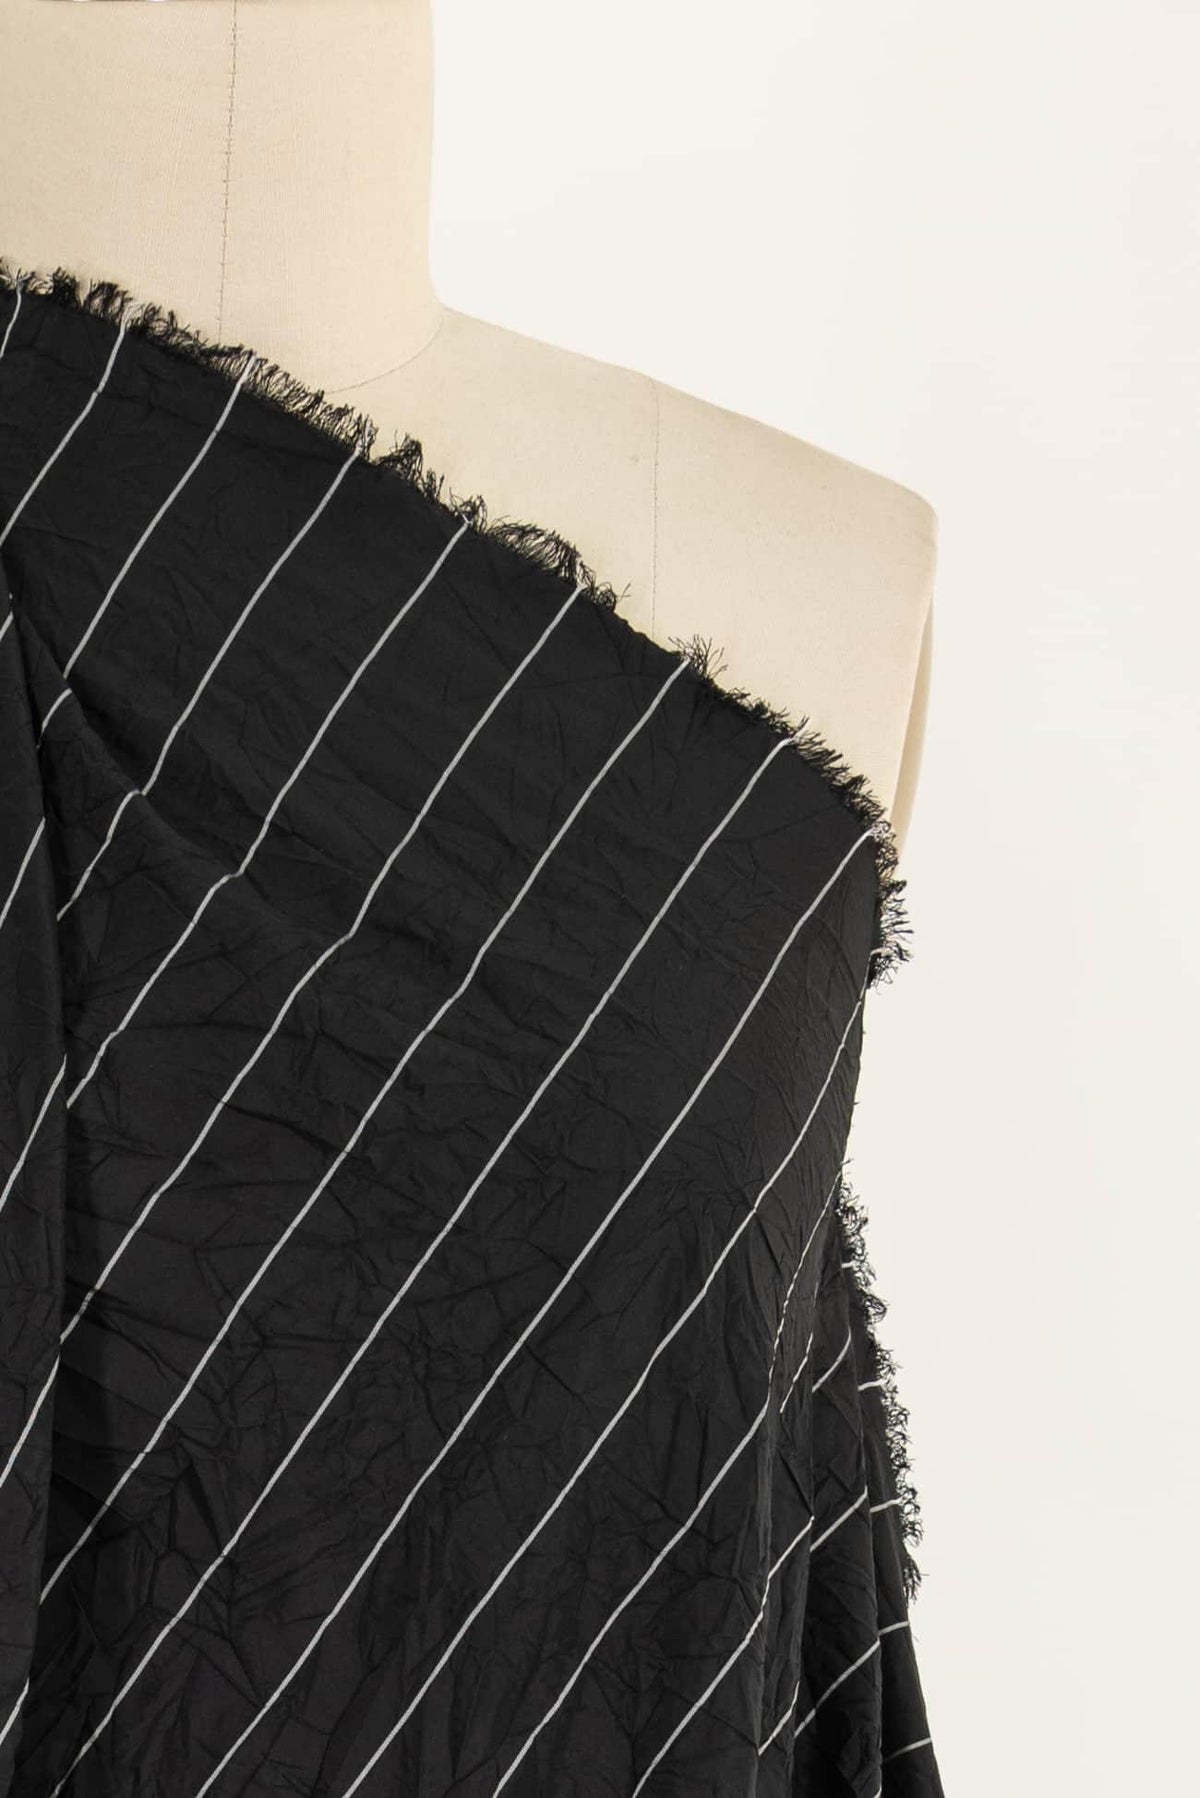 Tiburon Stripe Crinkle Woven - Marcy Tilton Fabrics